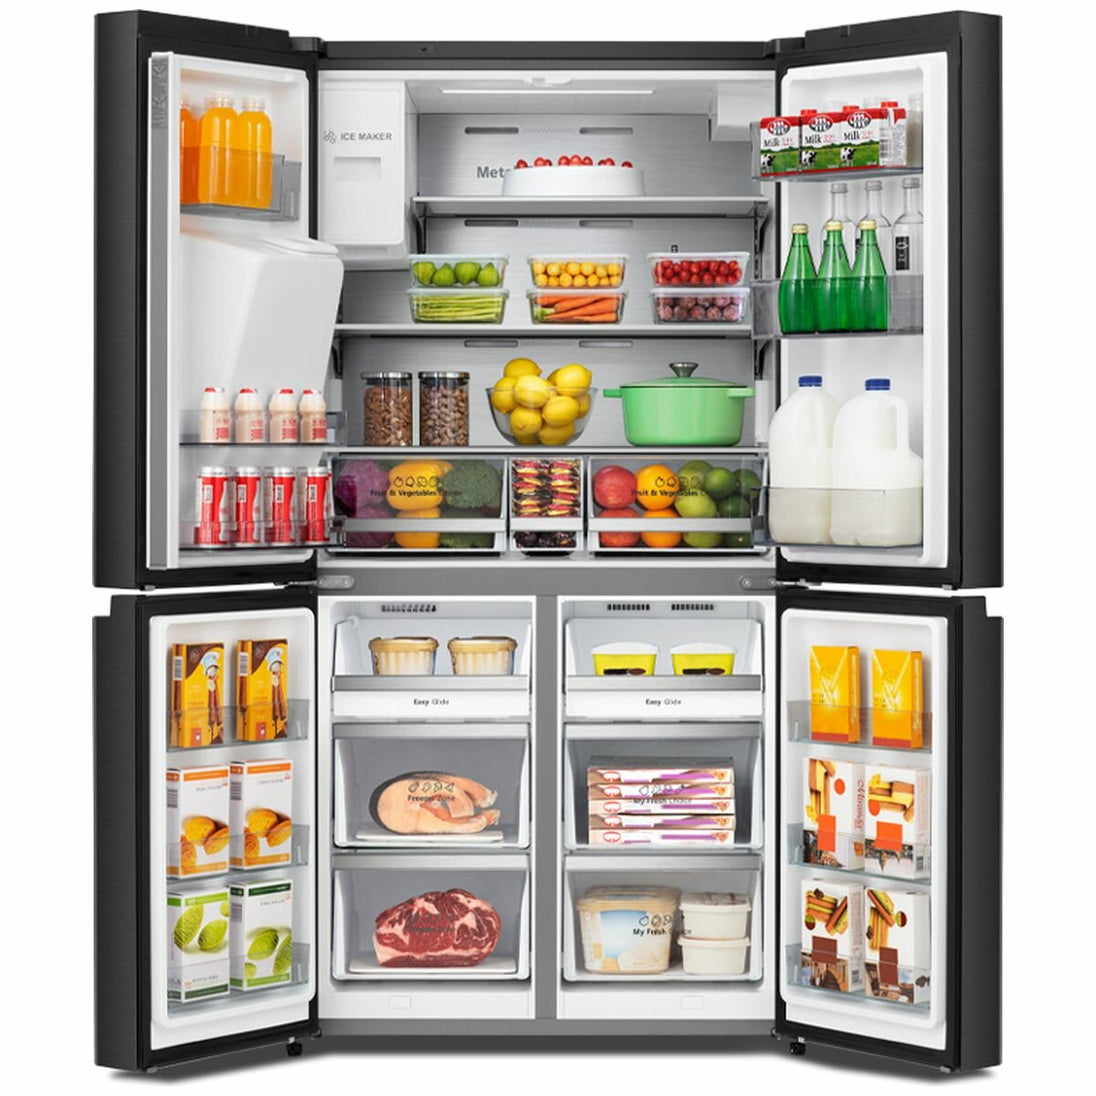 hisense-585l-french-door-refrigerator-hrcd585bw-5-1c8fe128-high